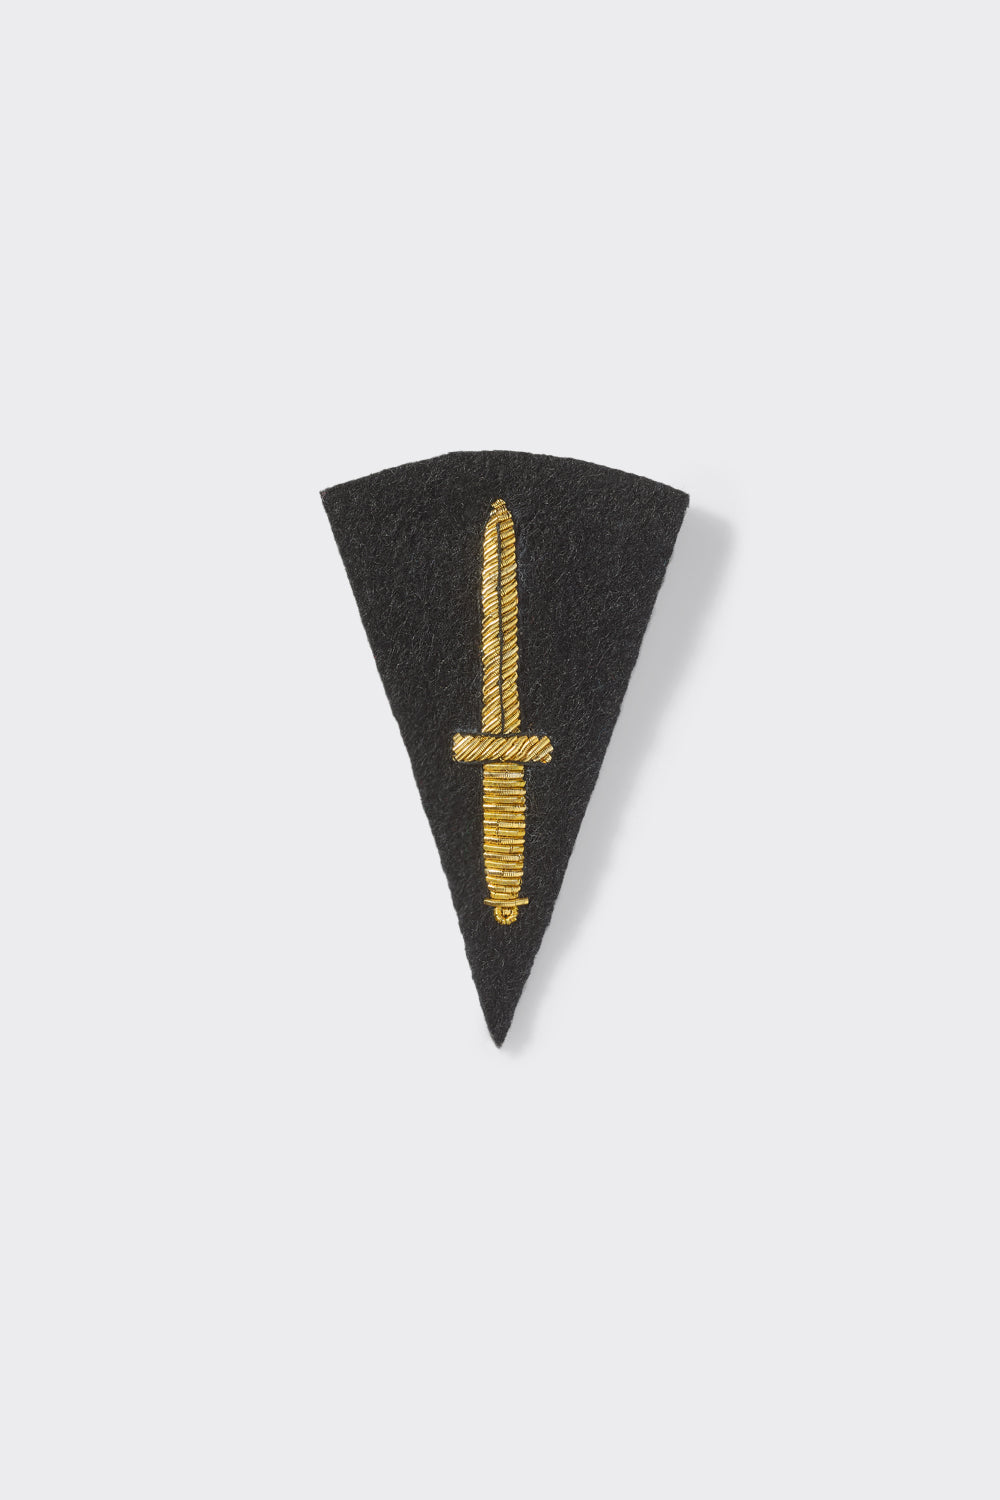 Commando Dagger Badge - Large